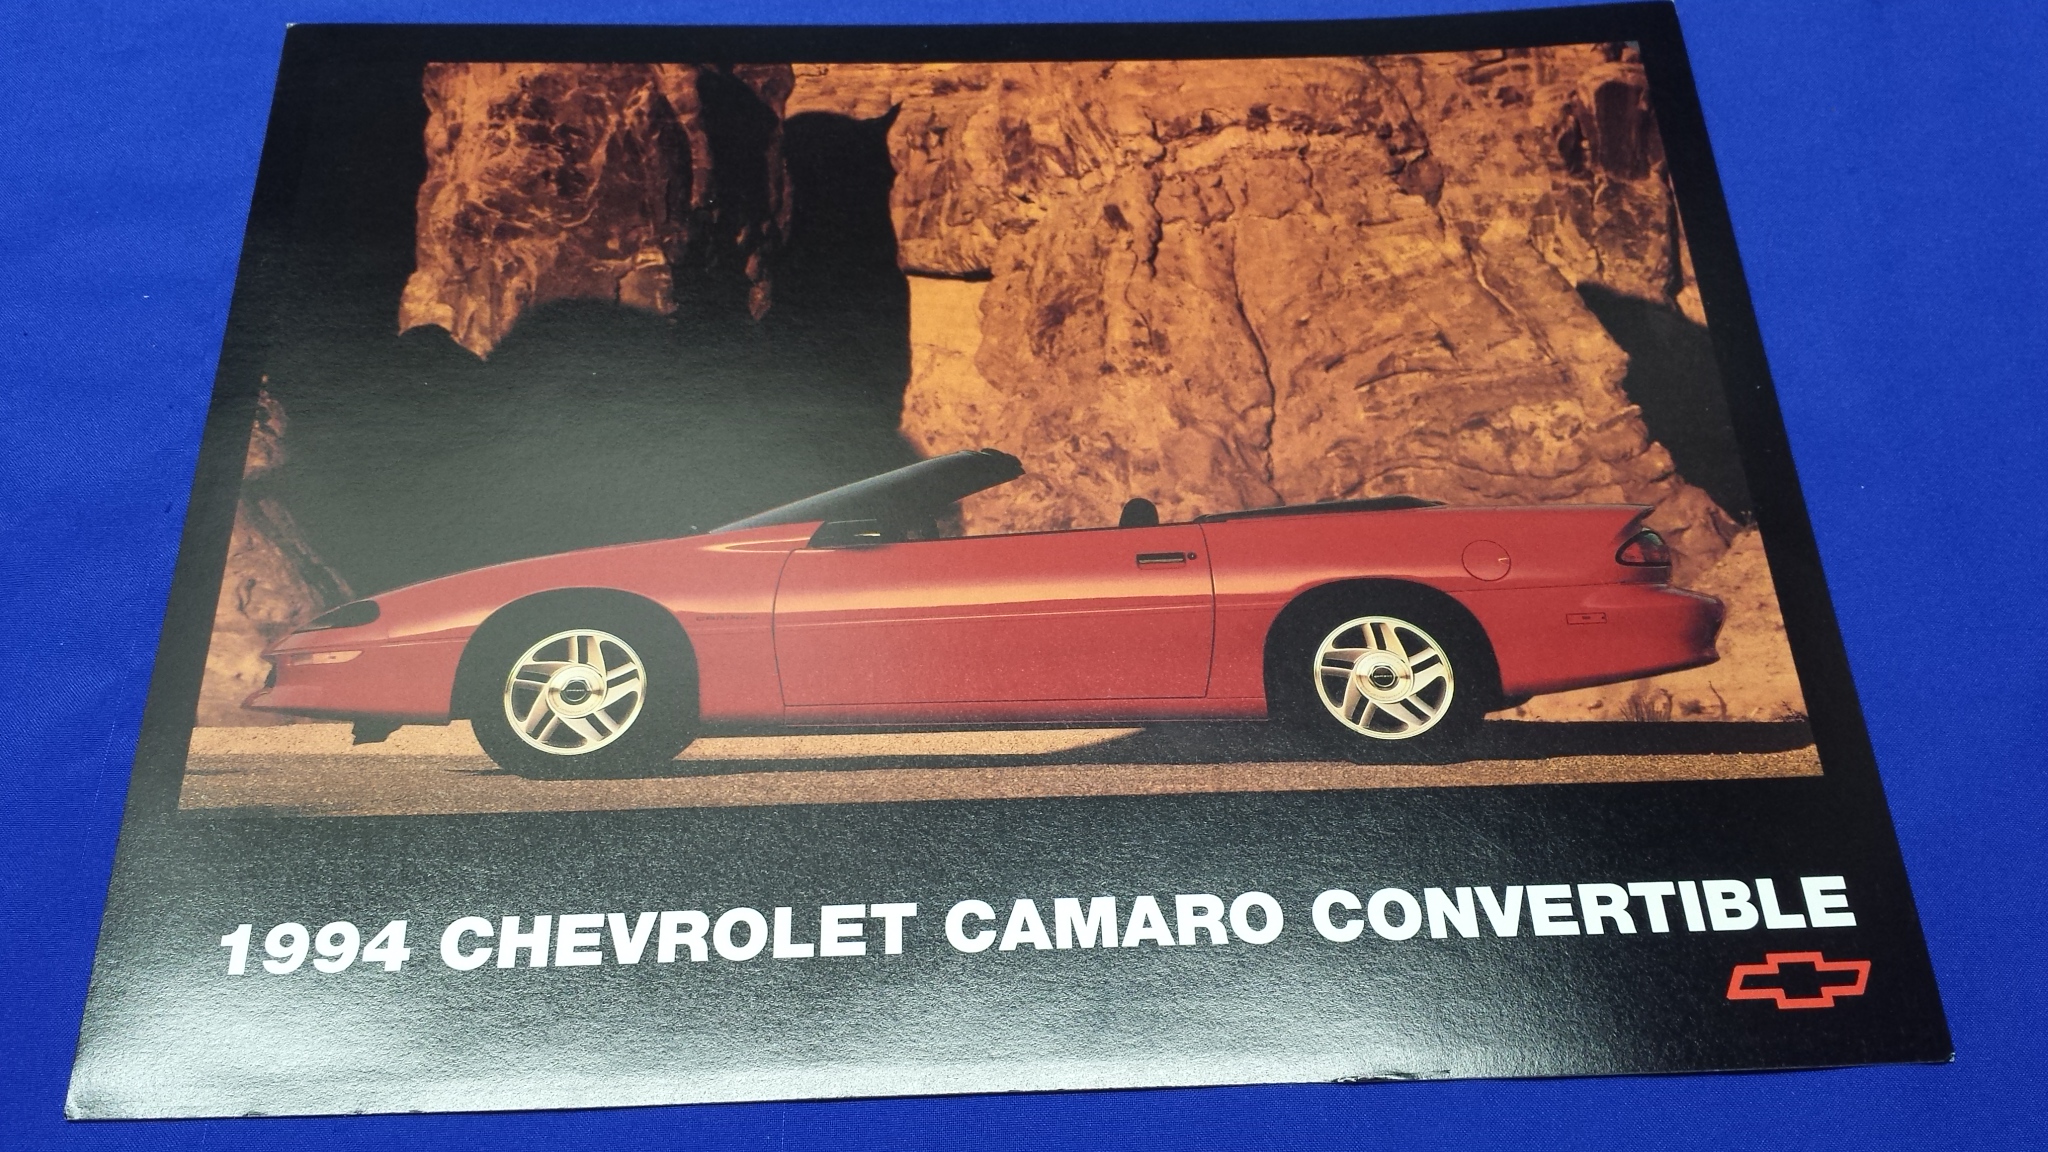 1994 Chevy Camaro Convertible Mini Poster Info Card